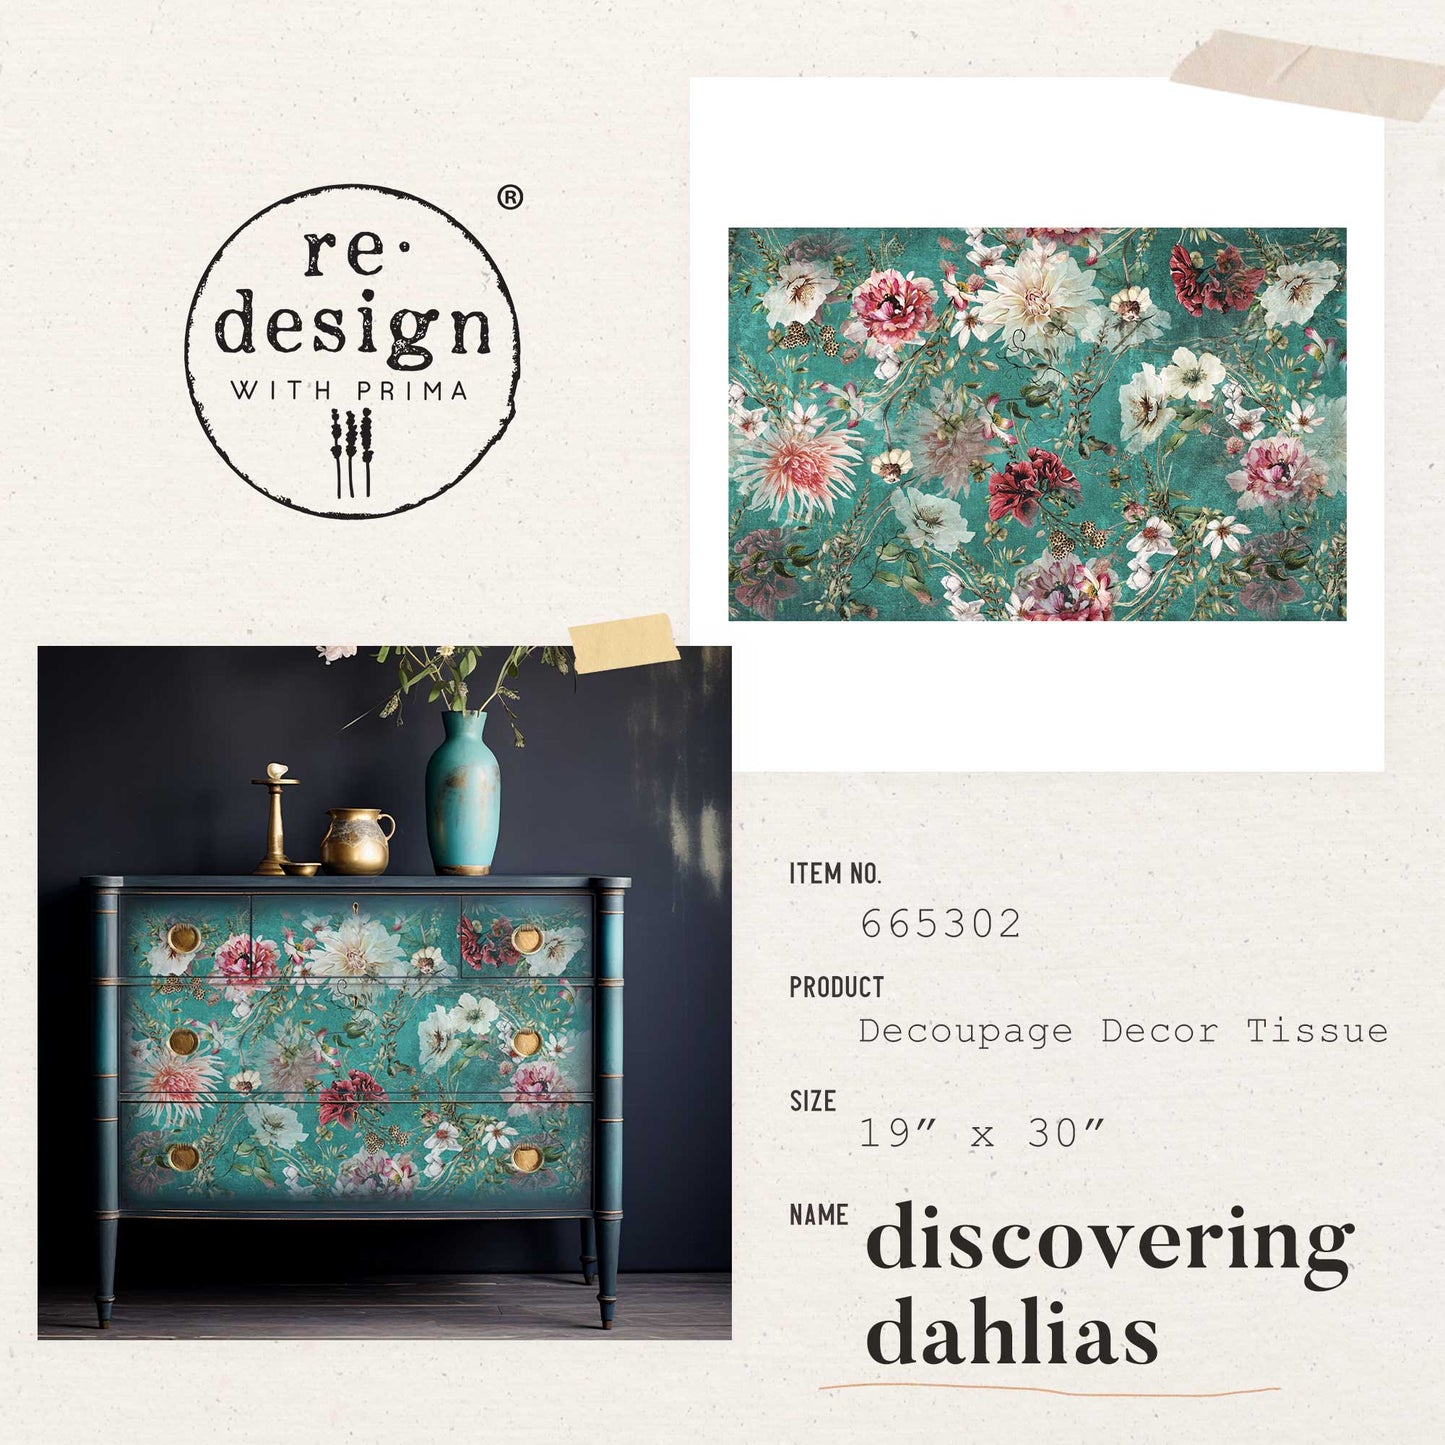 reDesign with Prima Decor Tissue Paper - Discovering Dahlias